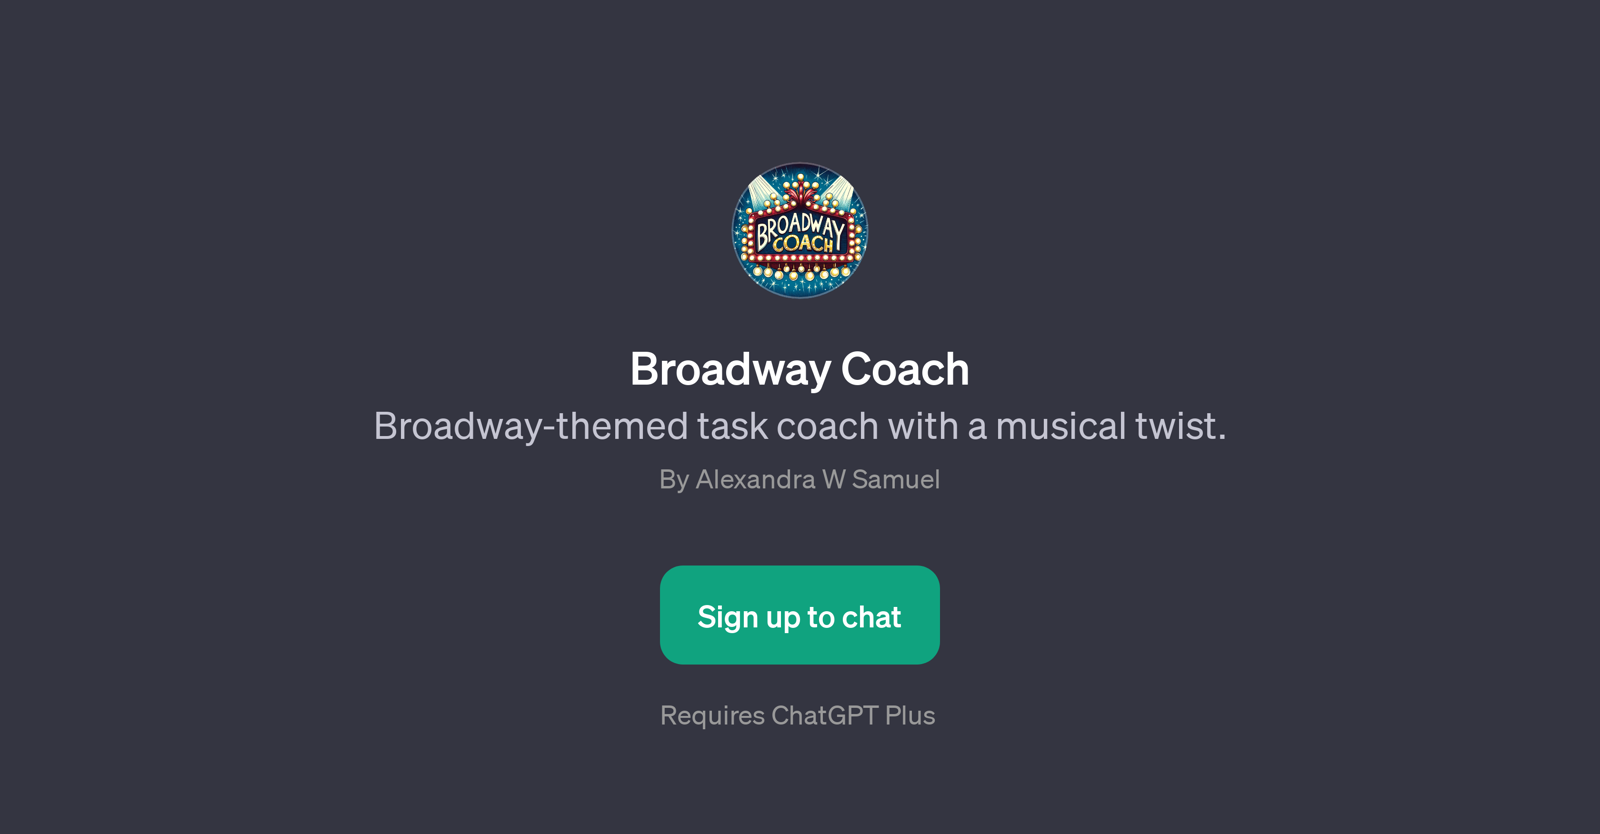 Broadway Coach website